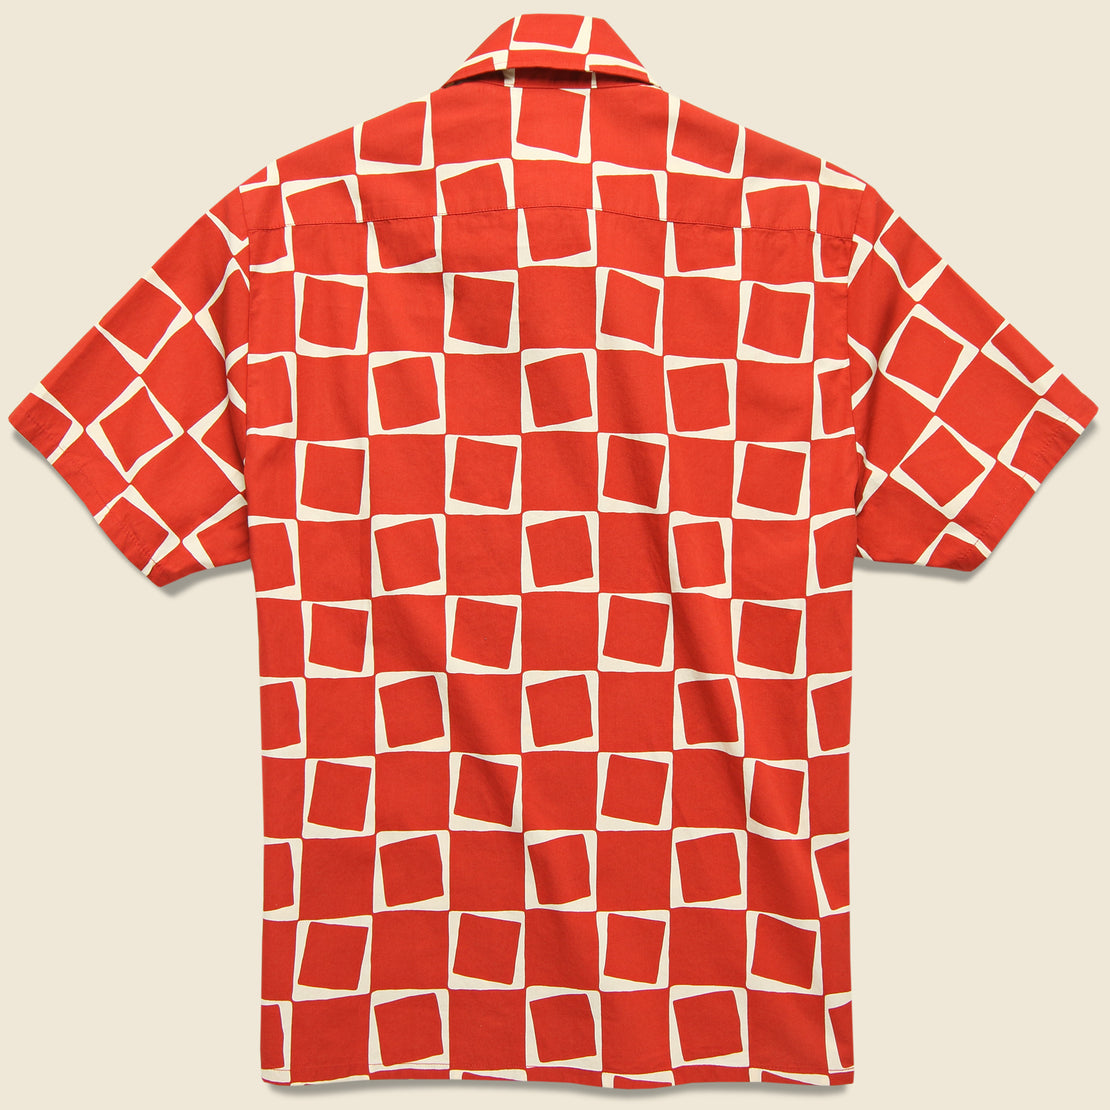 1950s Atomic Square Print Shirt - Red